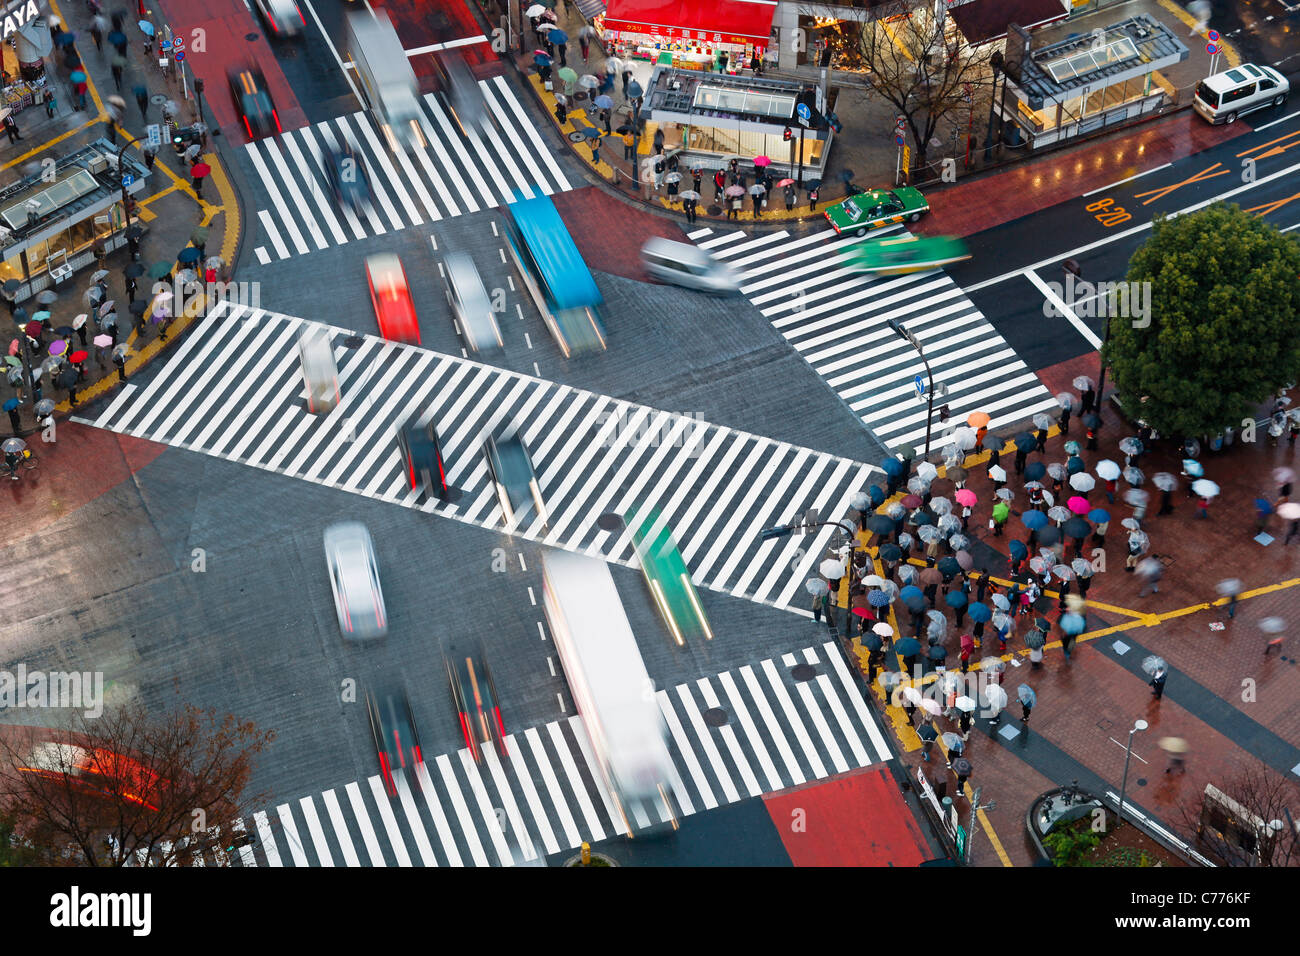 Asia, Japan, Tokyo, Shibuya, Shibuya Crossing - crowds of people crossing the famous crosswalks Stock Photo